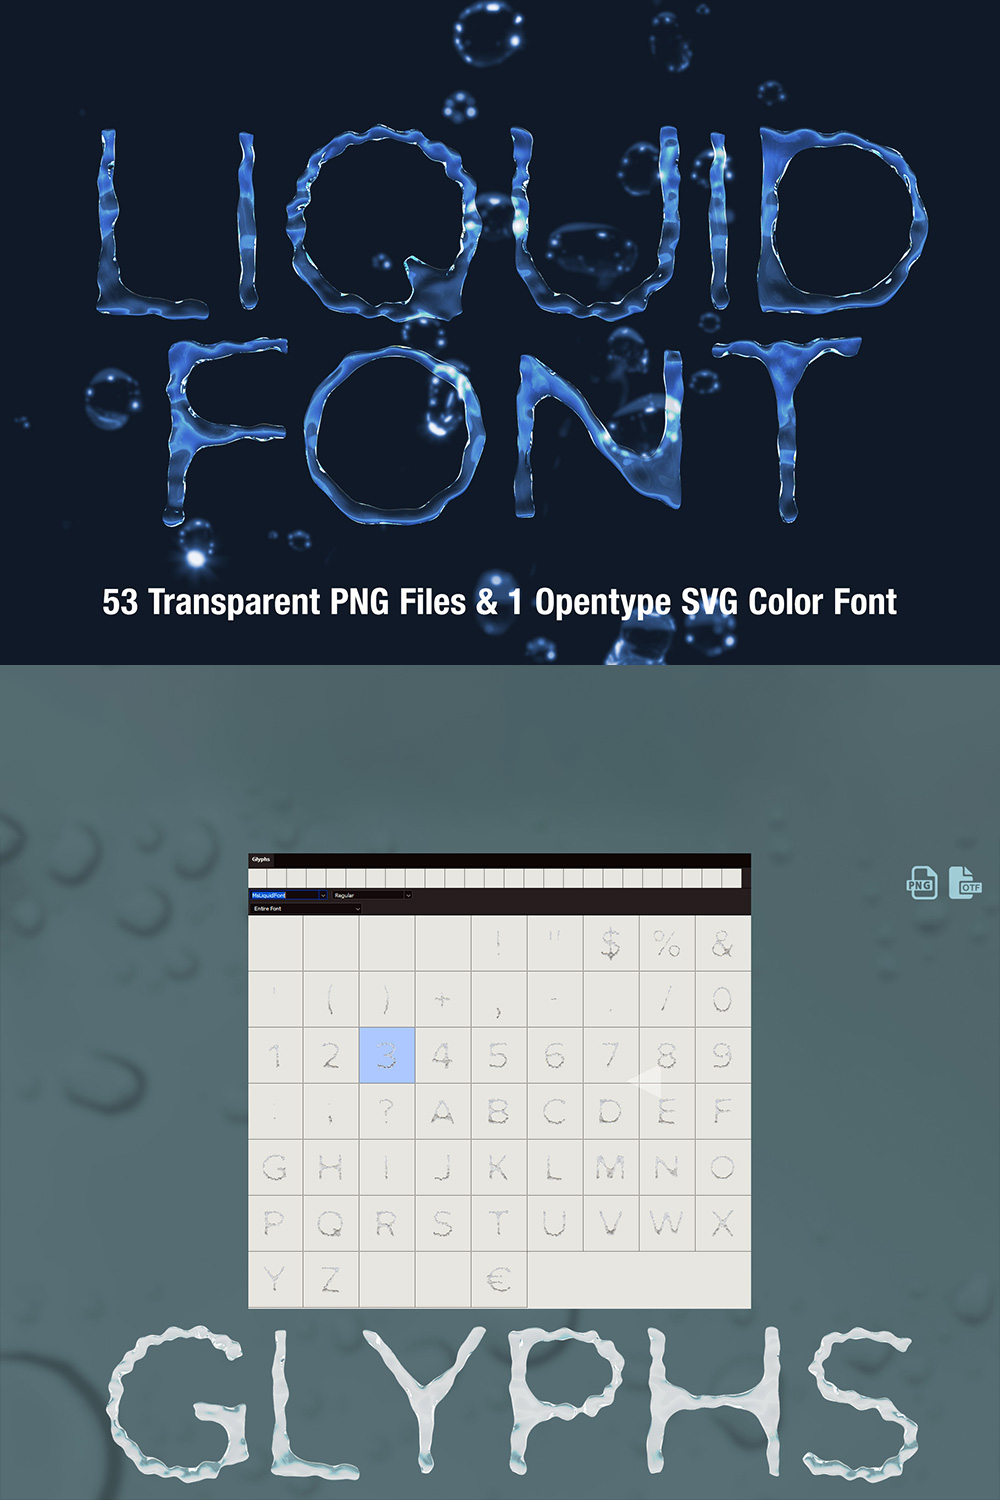 Ms Liquid Opentype SVG Font and PNG pinterest image.